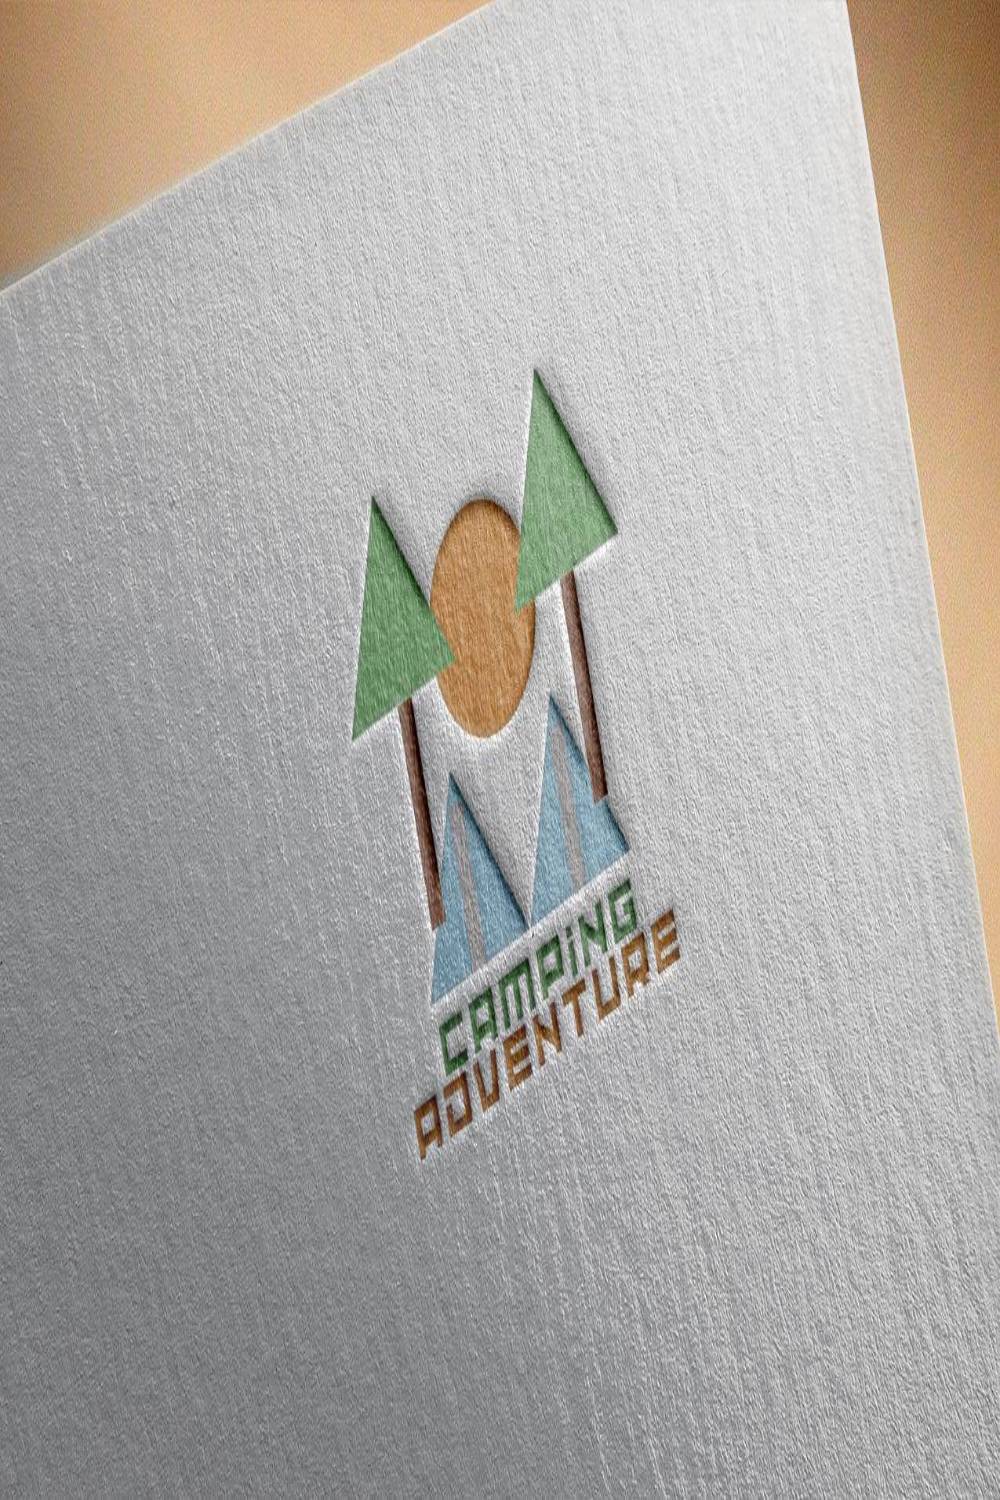 Camping Adventure Logo Design pinterest image.